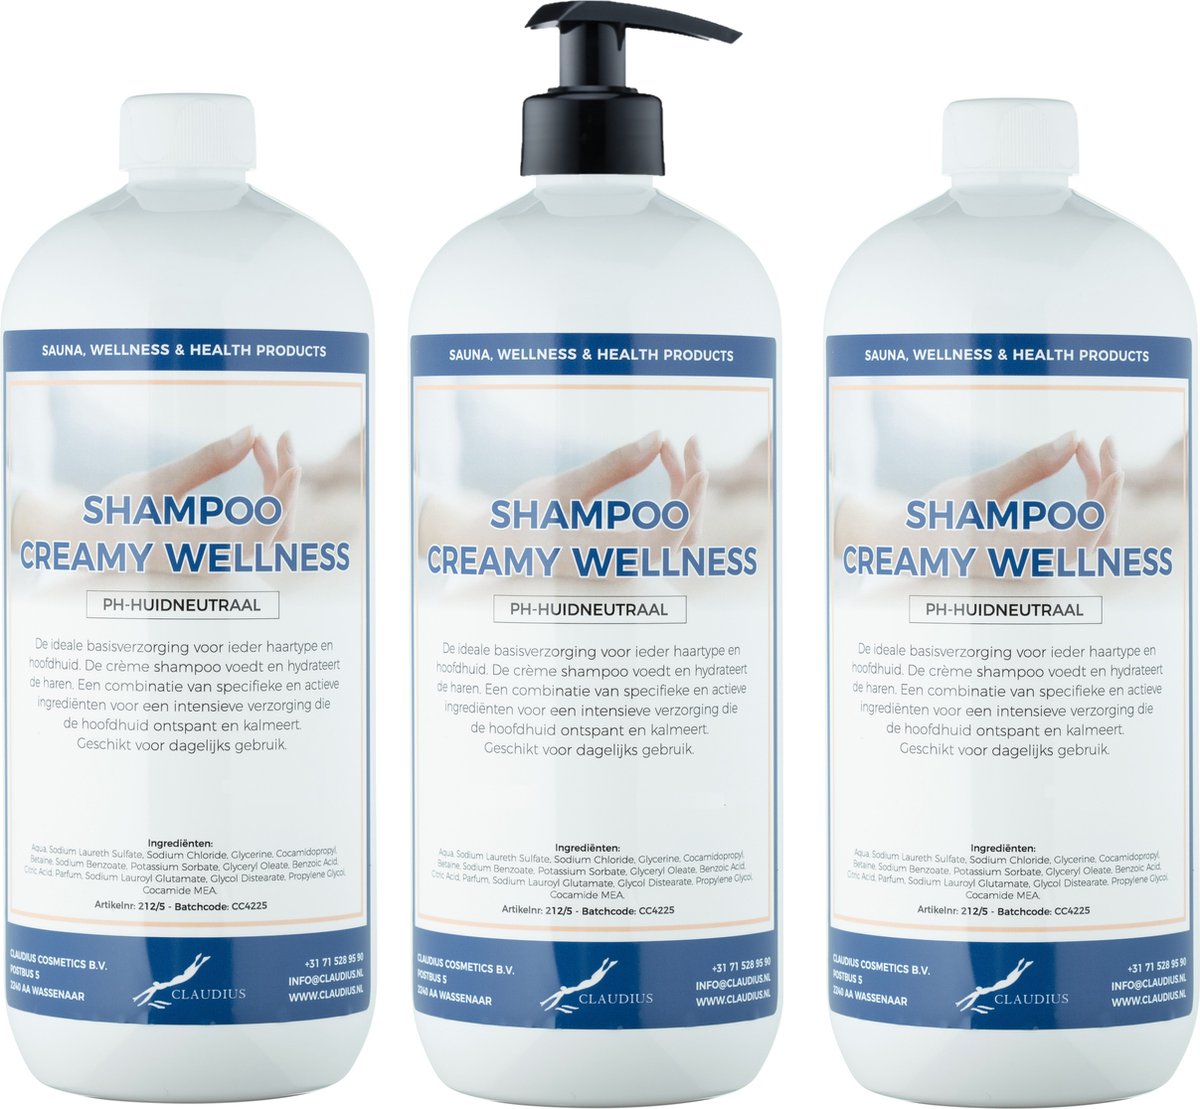 Shampoo Creamy Wellness - 1 Liter - set van 3 stuks - Gratis pomp